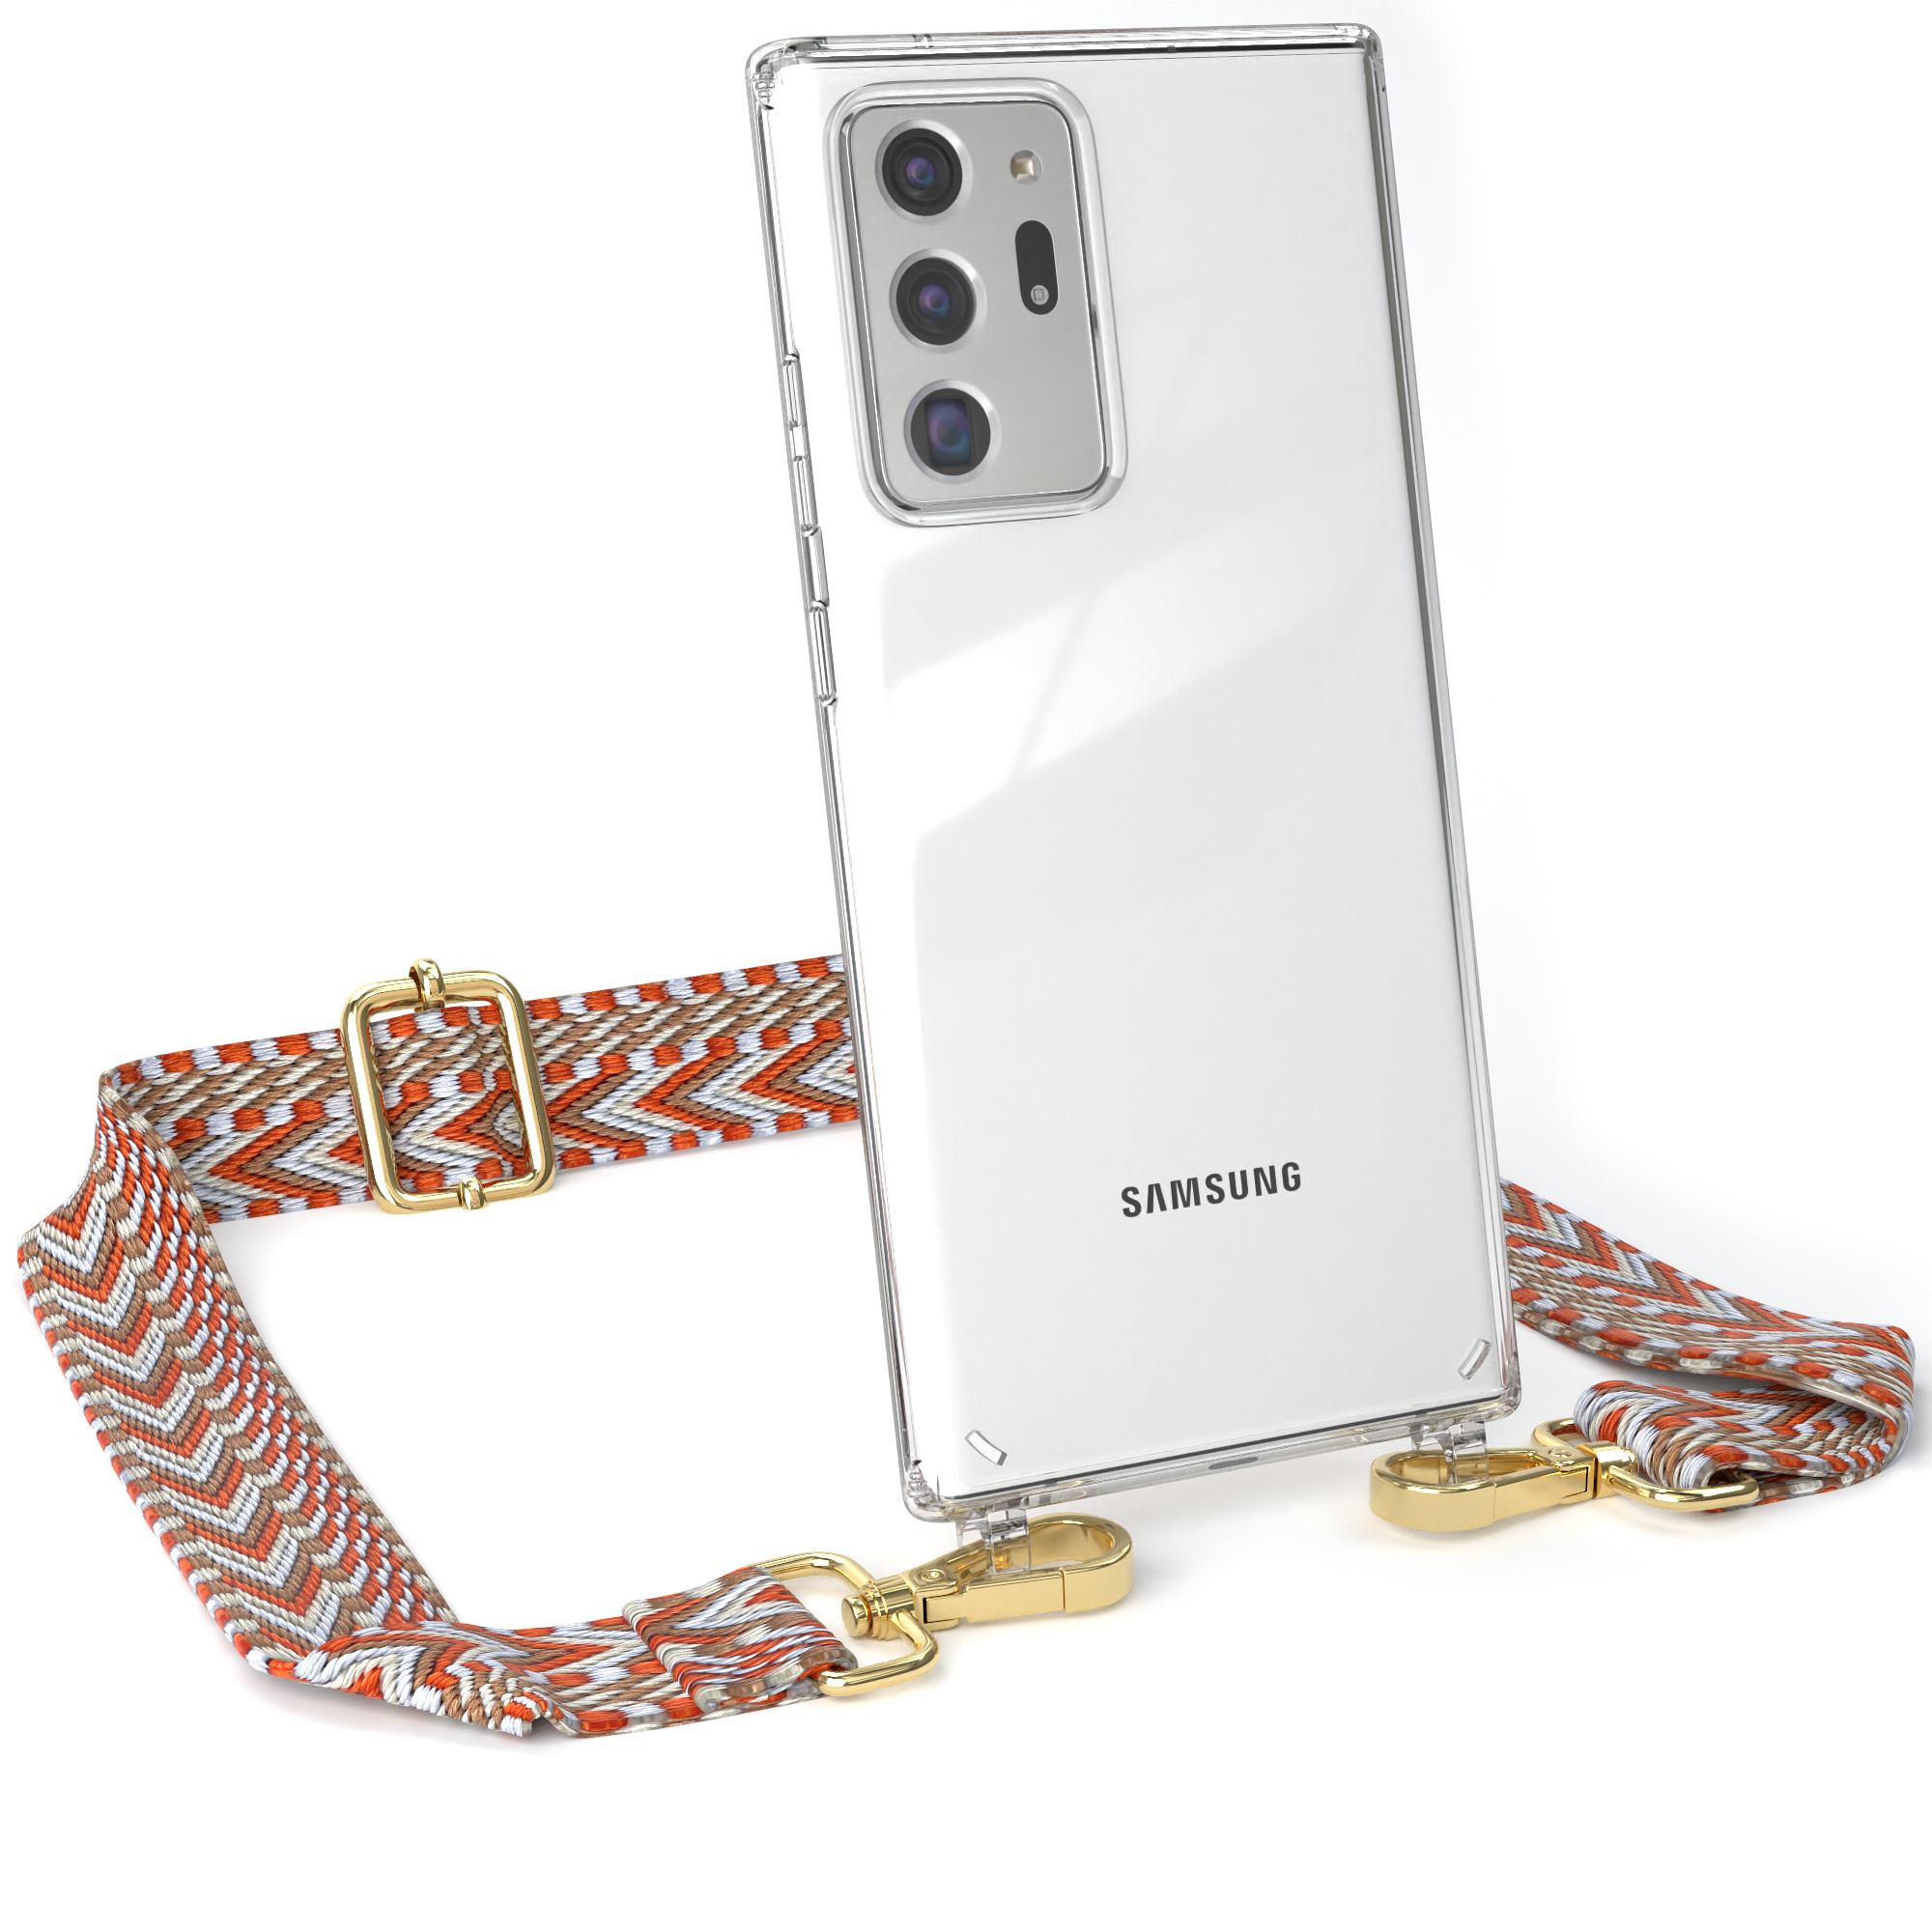 EAZY CASE Transparente Handyhülle 20 Galaxy Kordel Note Boho 20 Umhängetasche, Samsung, Rot Note / Hellblau 5G, Style, / Ultra mit Ultra